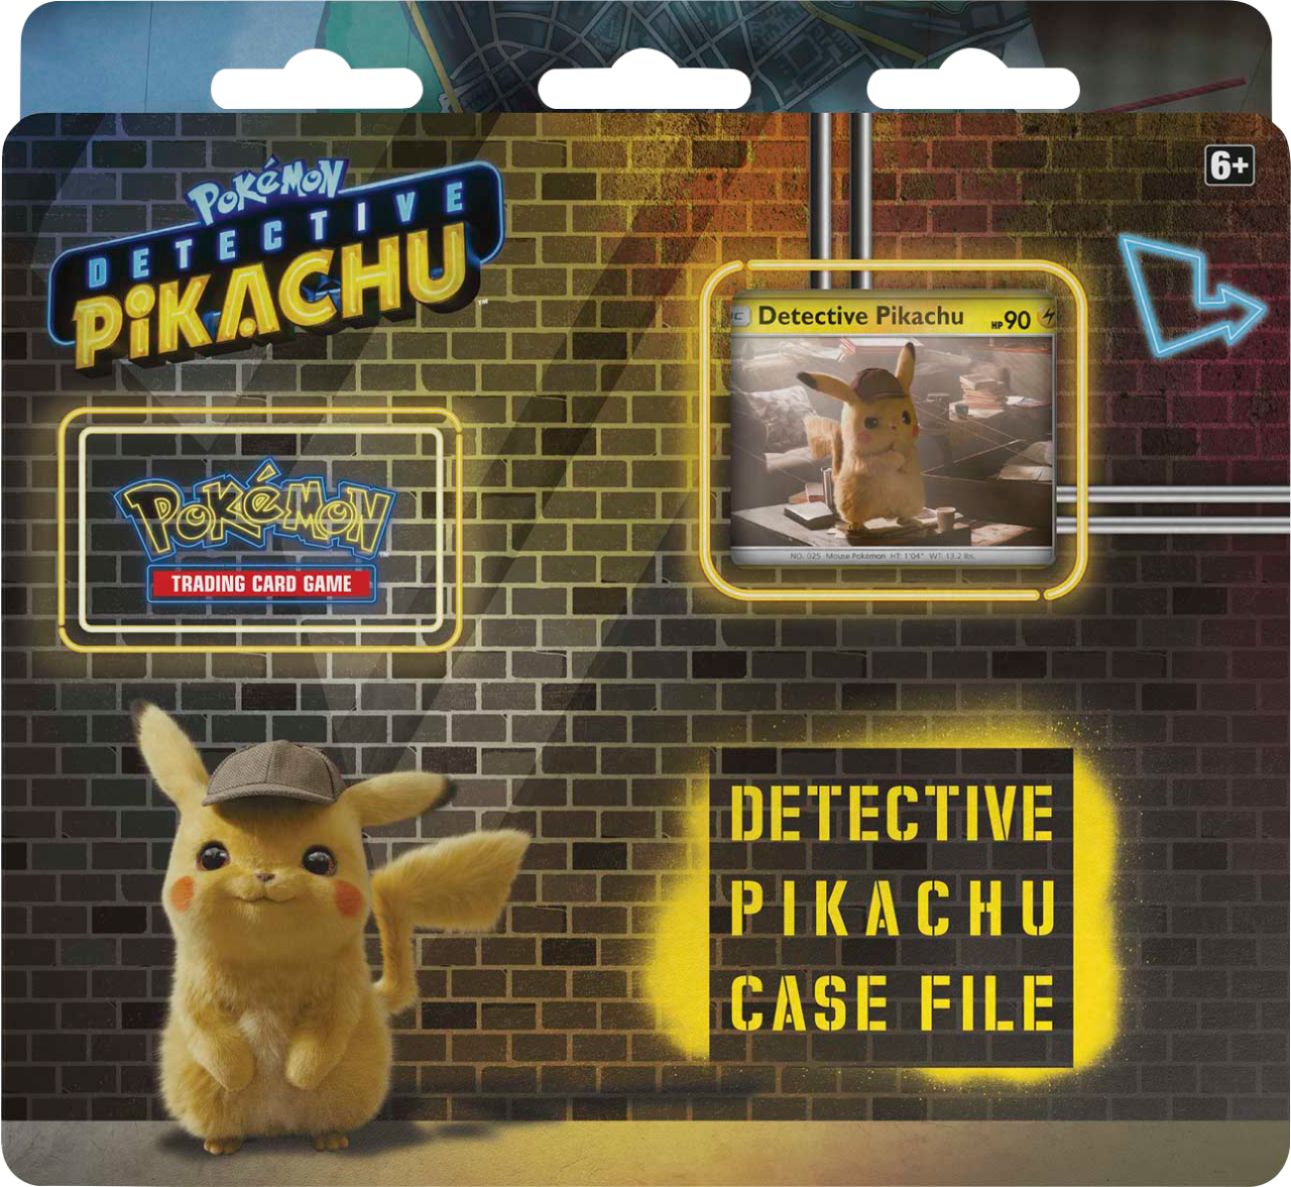 Pokémon Trading Card Game Detective Pikachu Case File